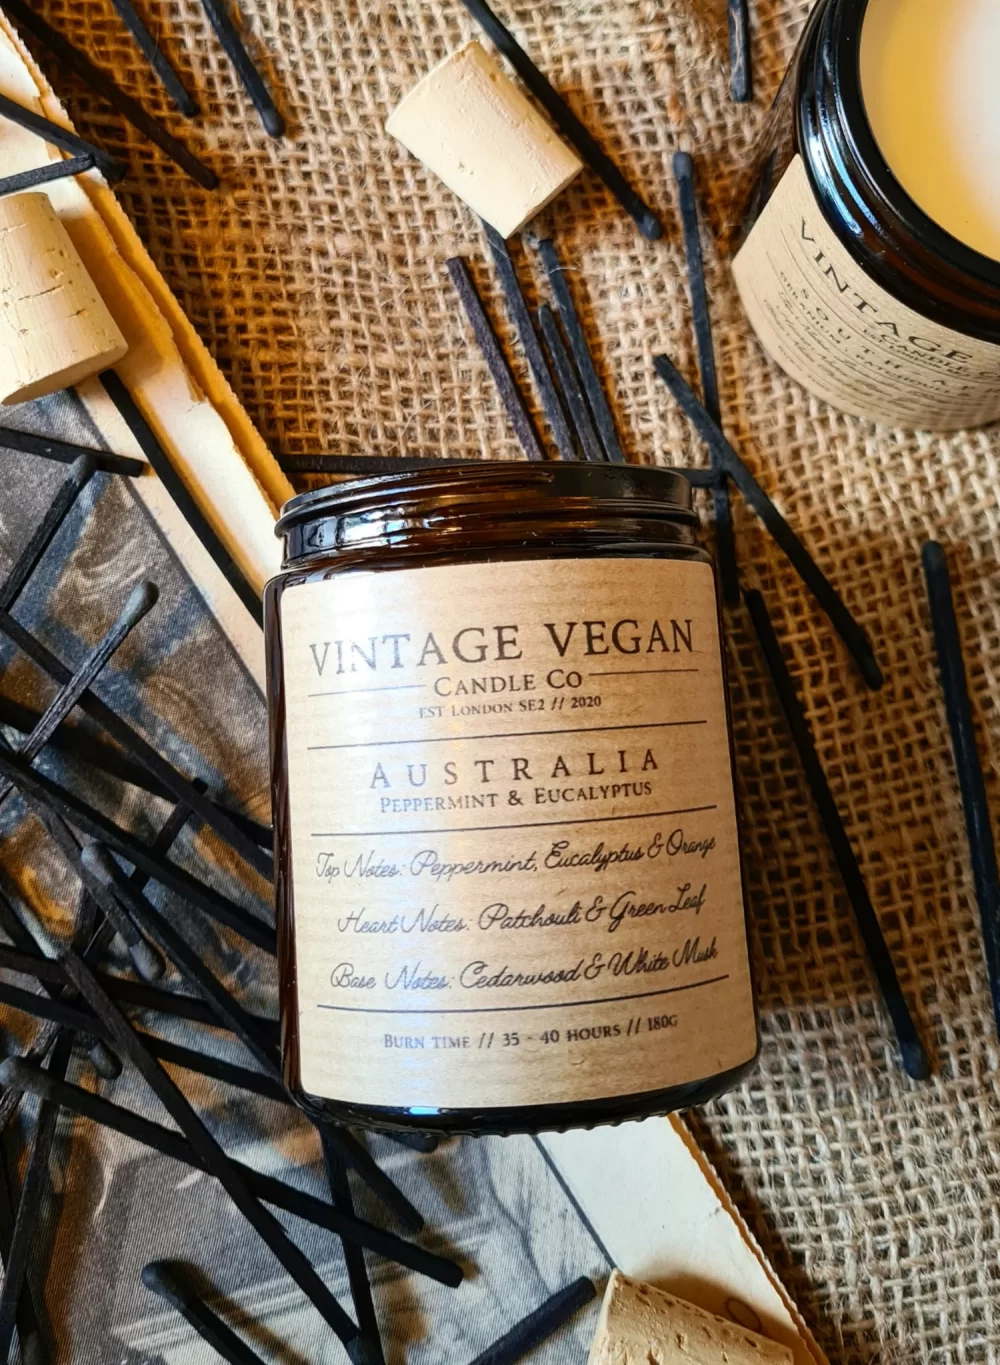 Australia vintage vegan candle company